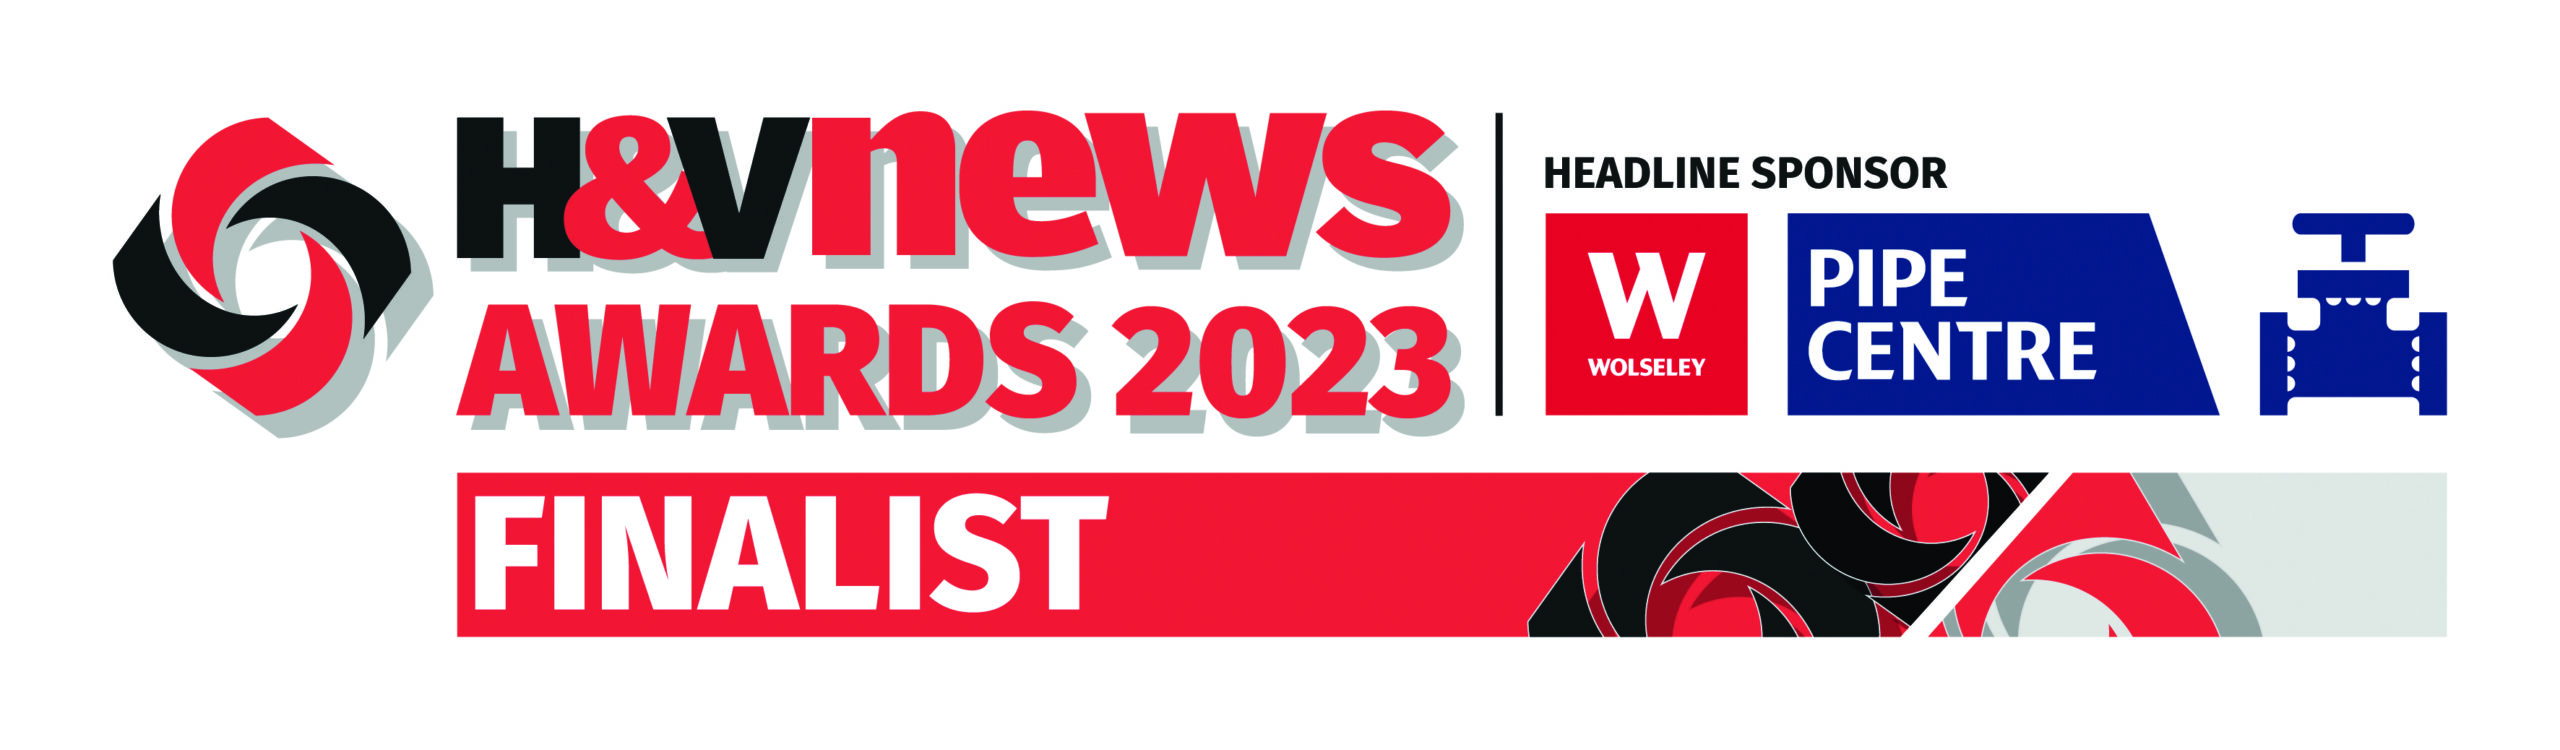 SPC Heat Cloud Shortlisted for H&V News Awards 2023